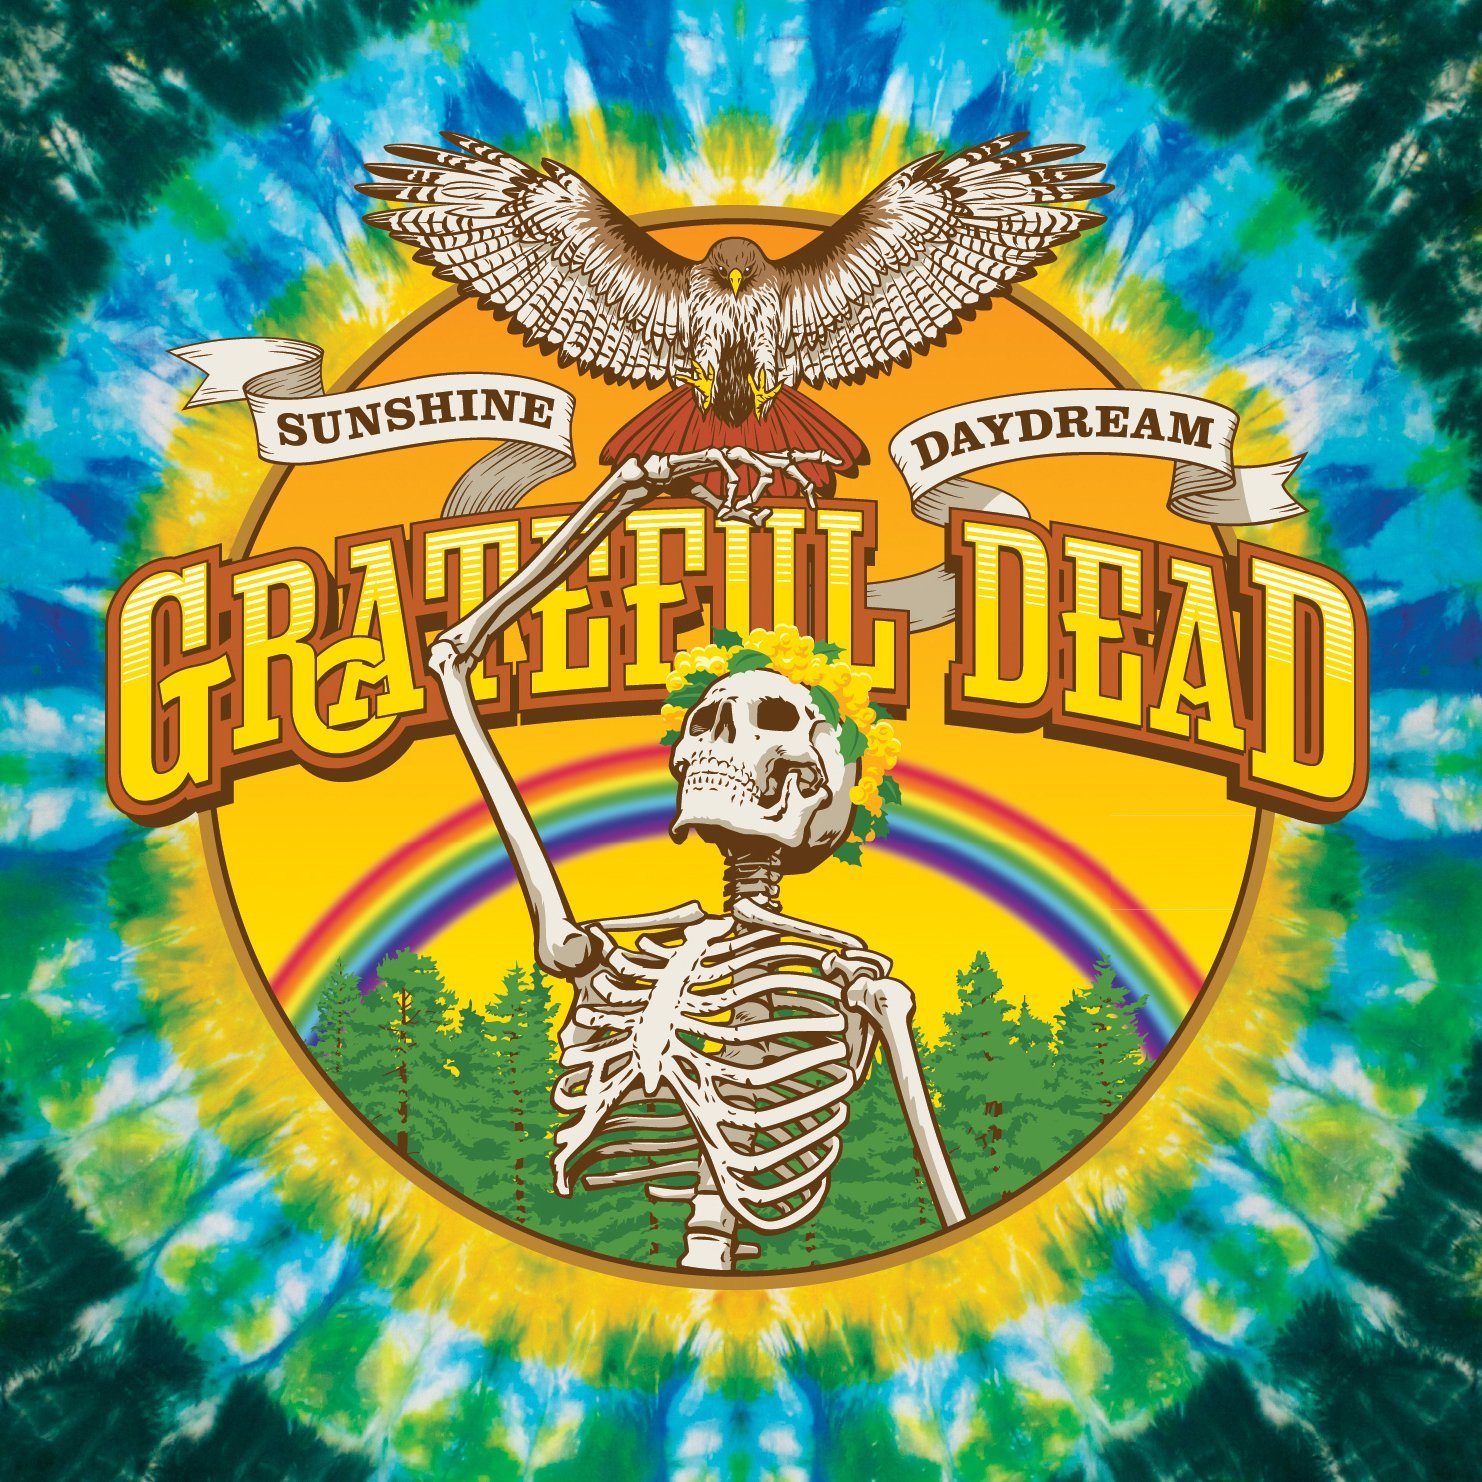 Grateful dead album covers - hillbatman